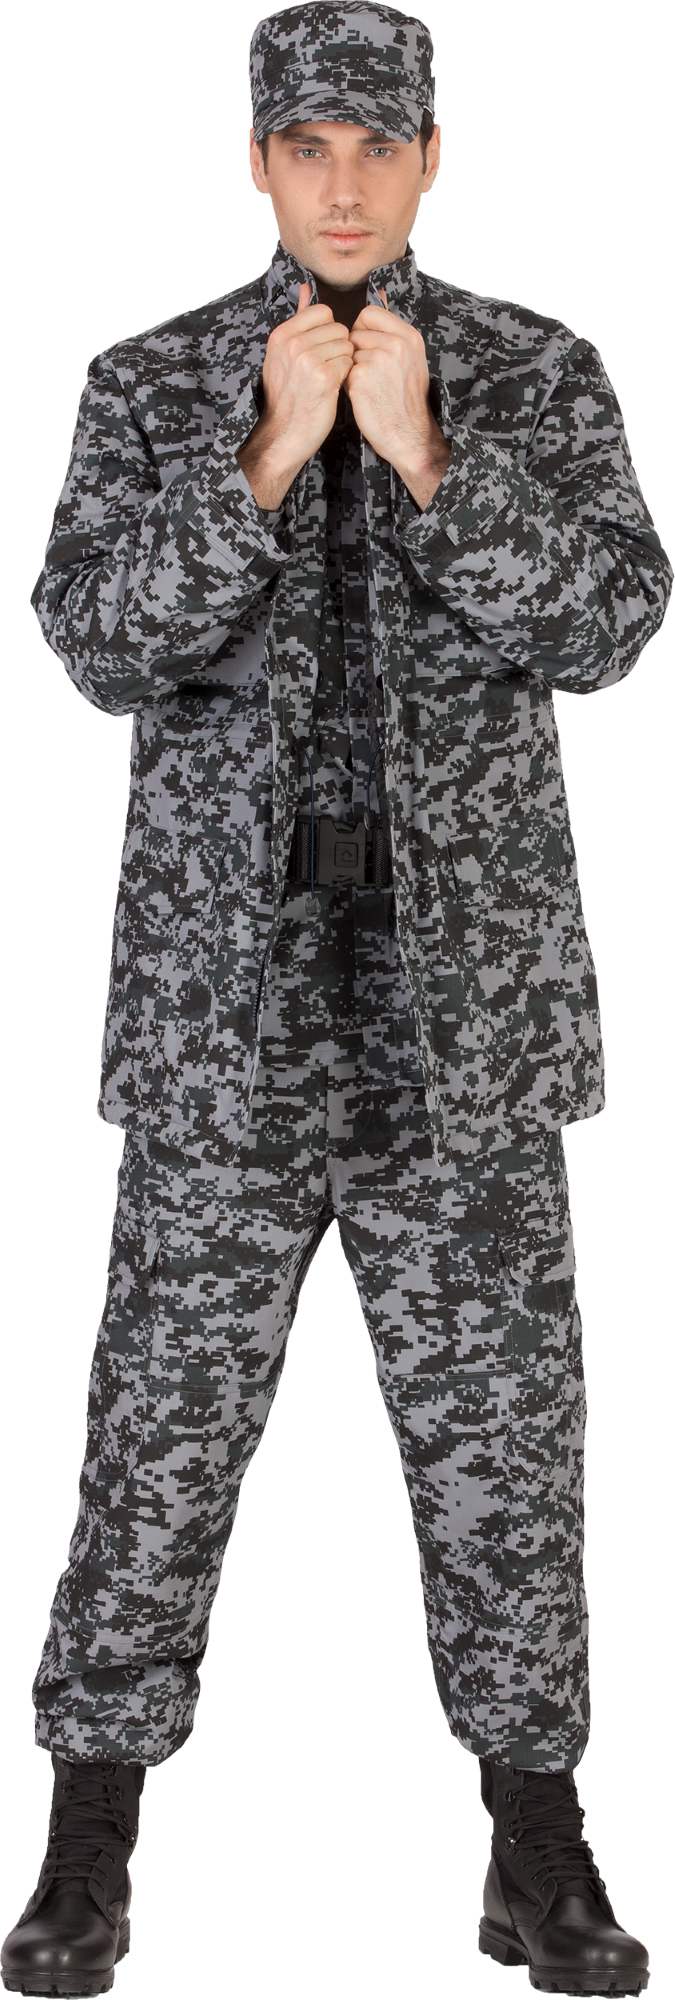 Camouflage Military Uniform